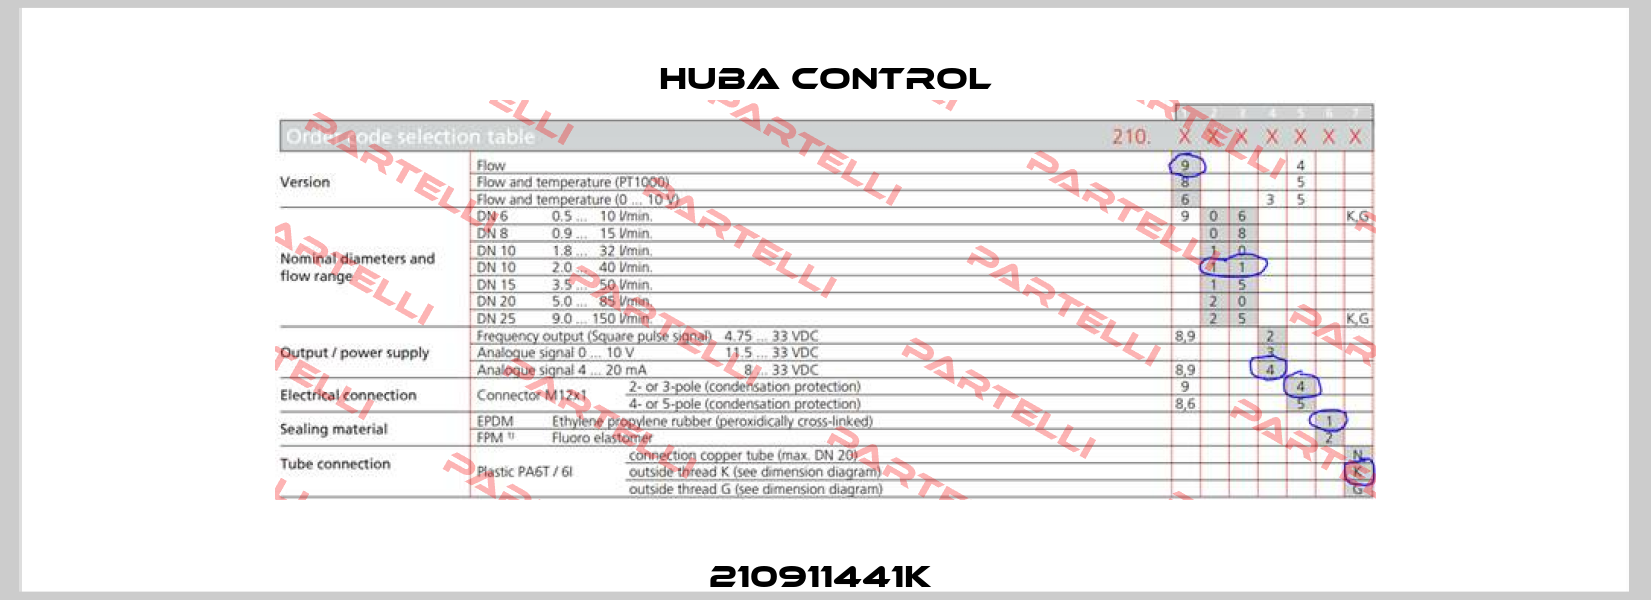 210911441K  Huba Control